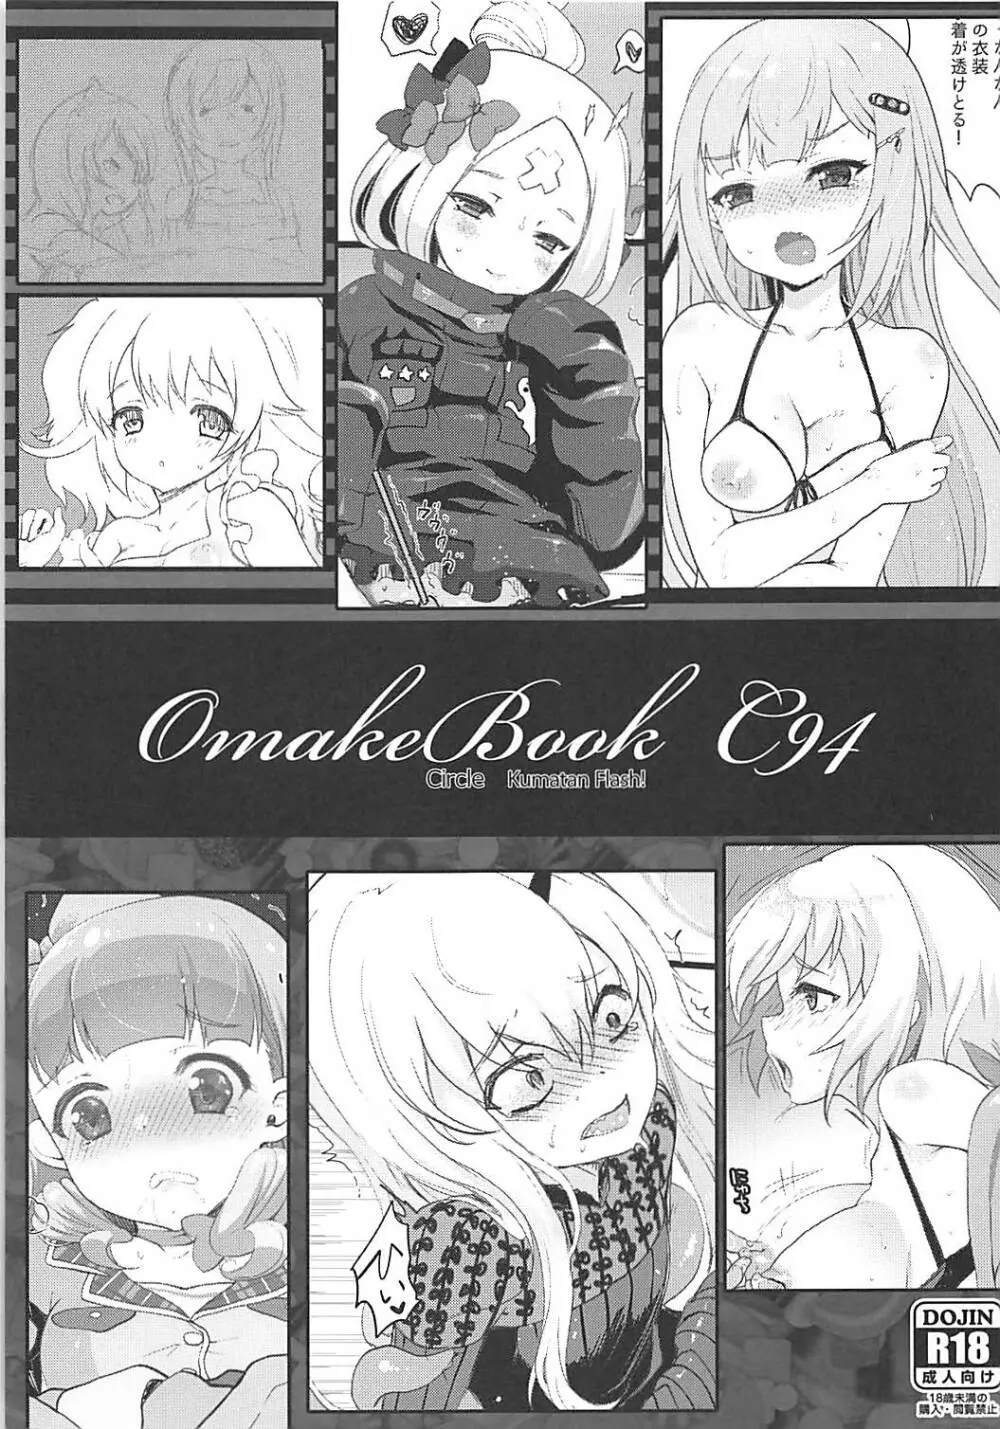 Omake Book C94